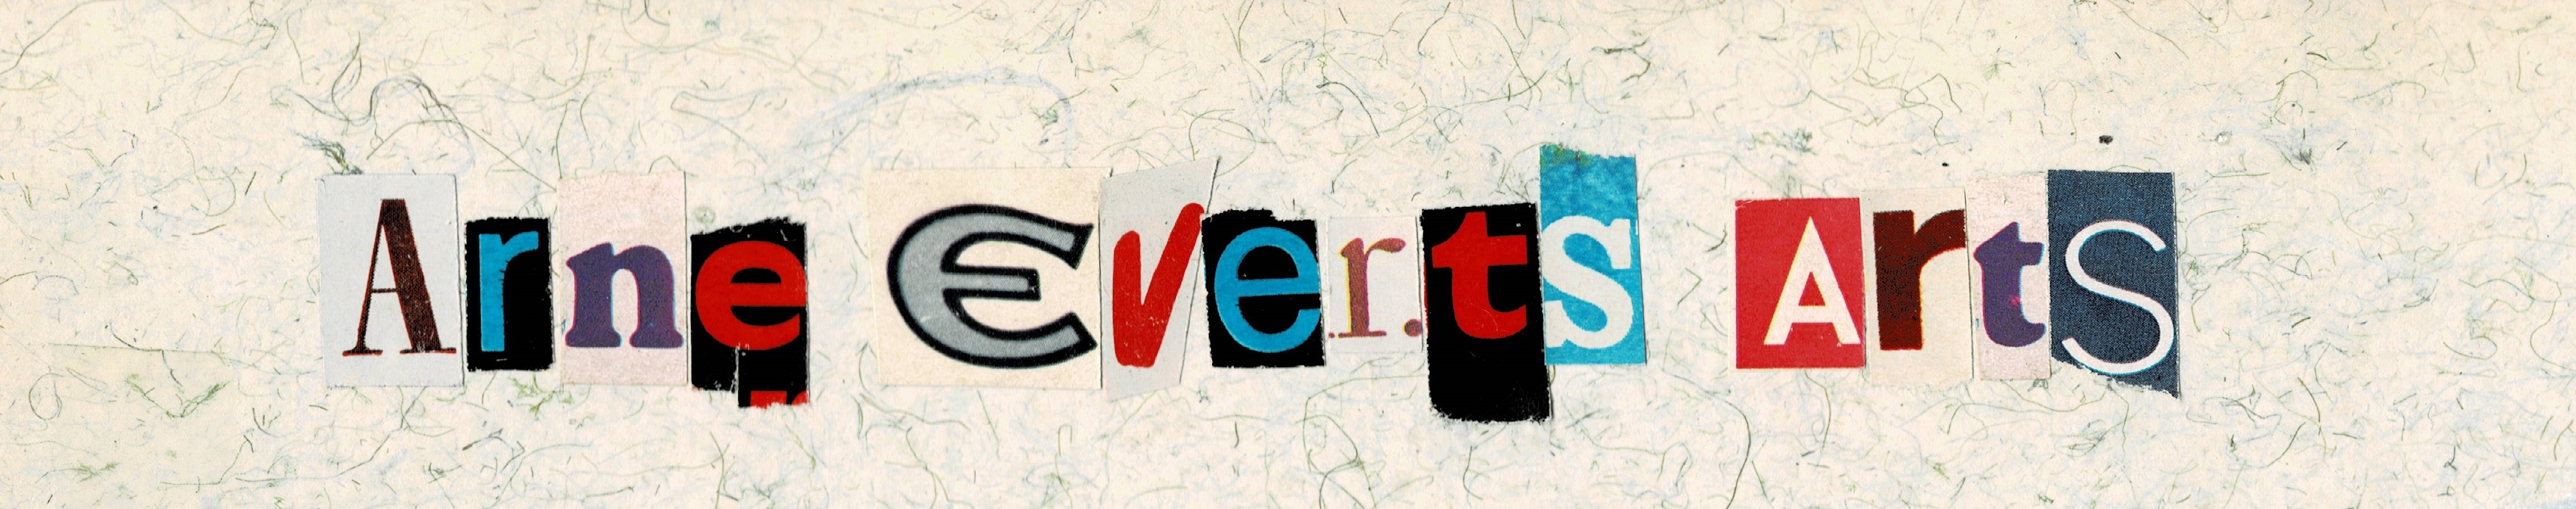 ArneEvertsArts banner